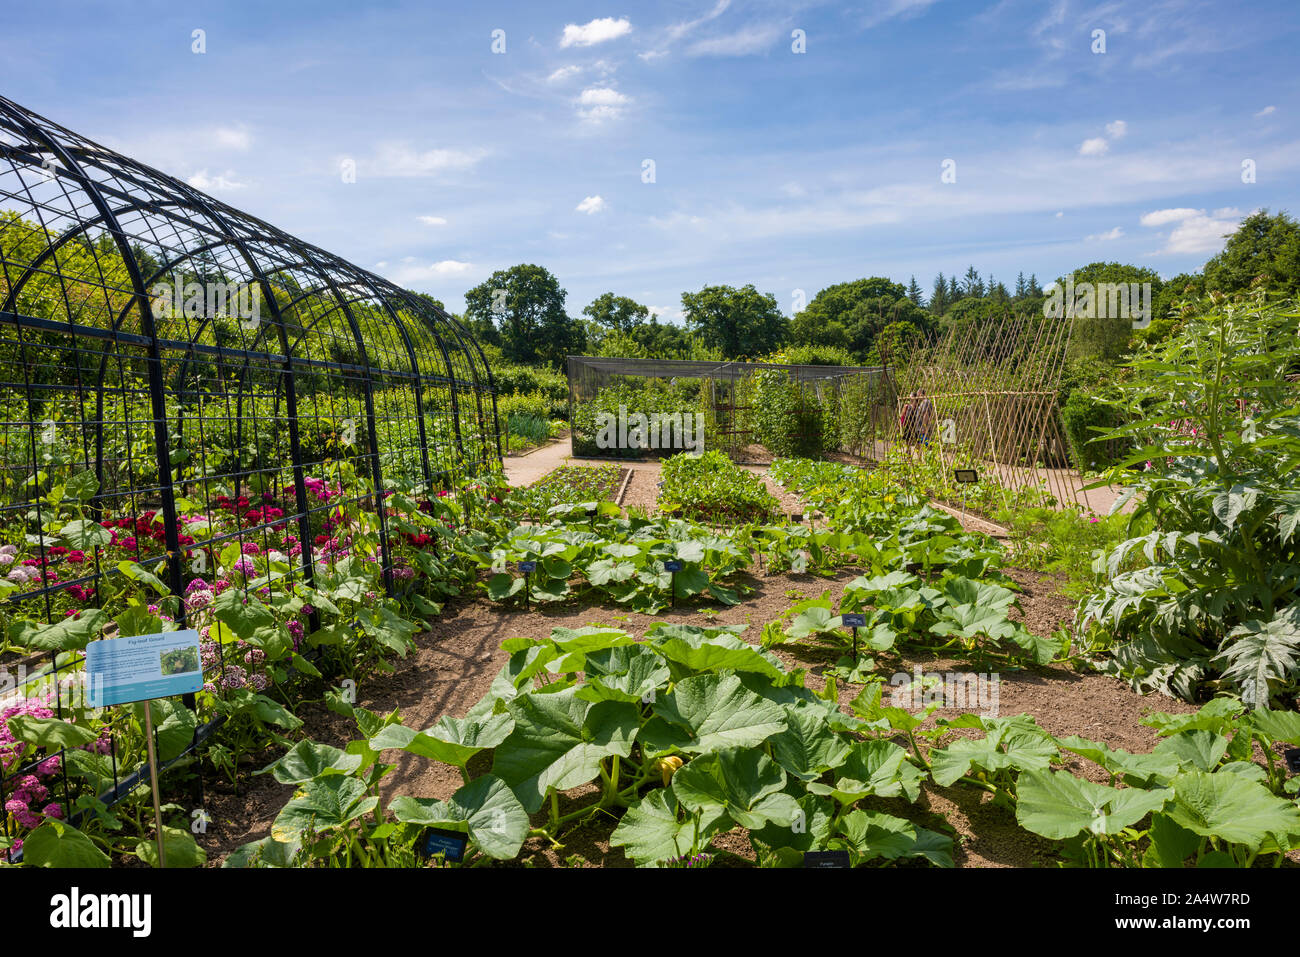 The vegetable garden at RHS Rosemoor in summer near Great Torrington, Devon, England. Stock Photo